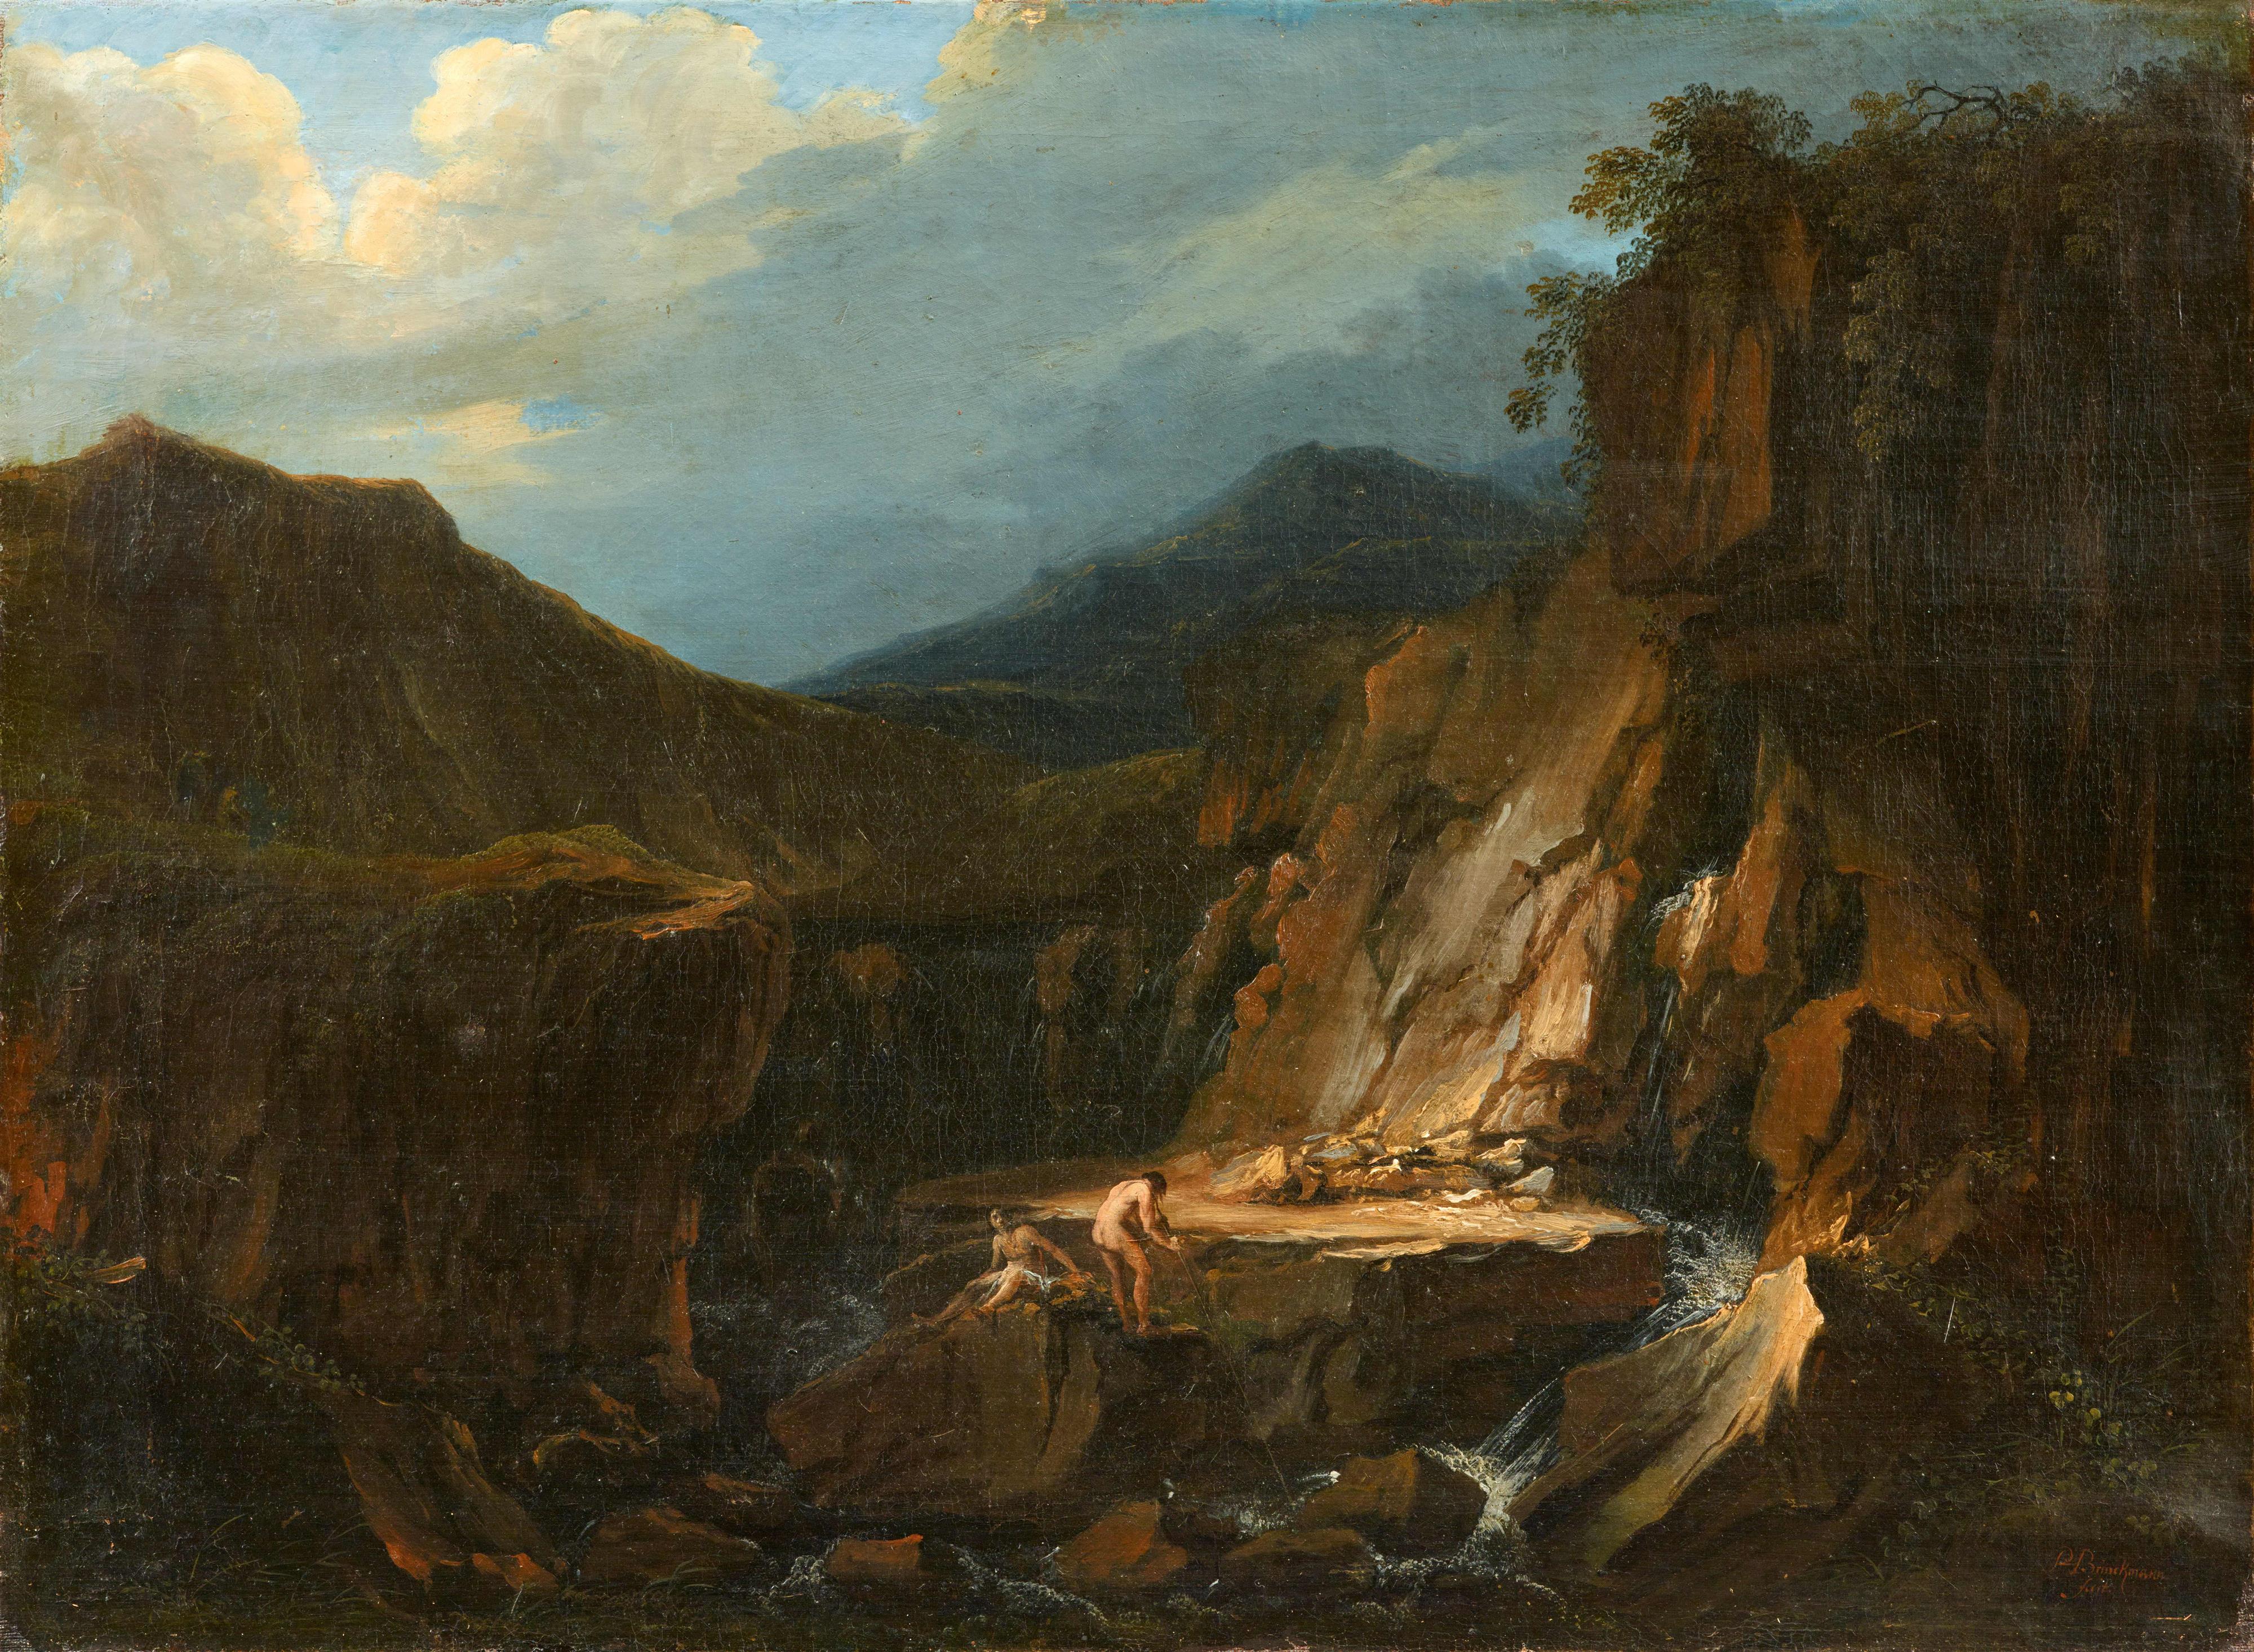 Philipp Hieronymus Brinckmann - Bathers in a Mountain Landscape - image-1